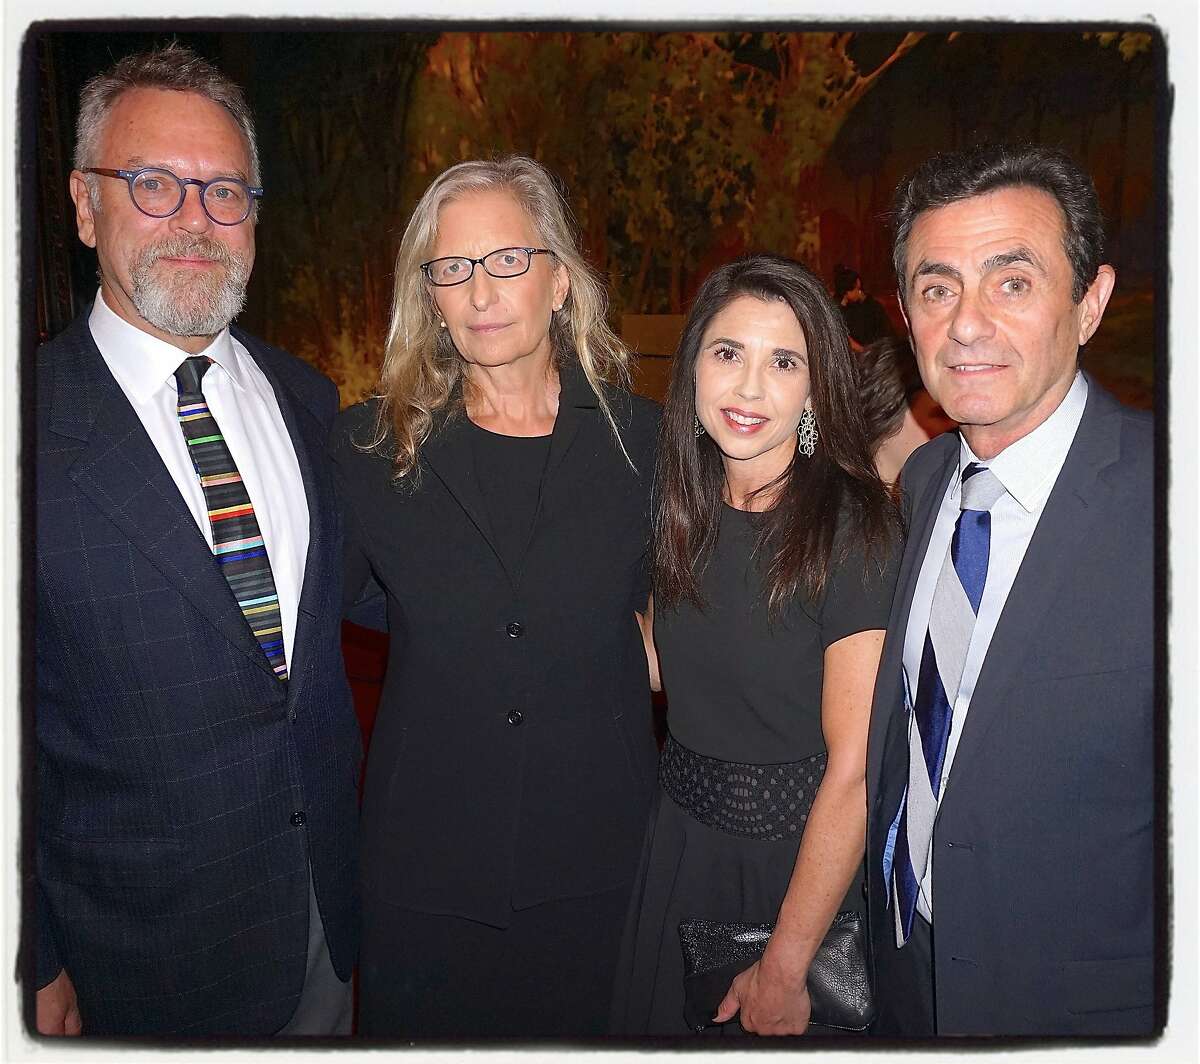 Nion McEvoy (left) with photographer Annie Leibovitz, MAC President Candace Cavanaugh and SFMOMA Director Neal Benezra. Nov 2015.